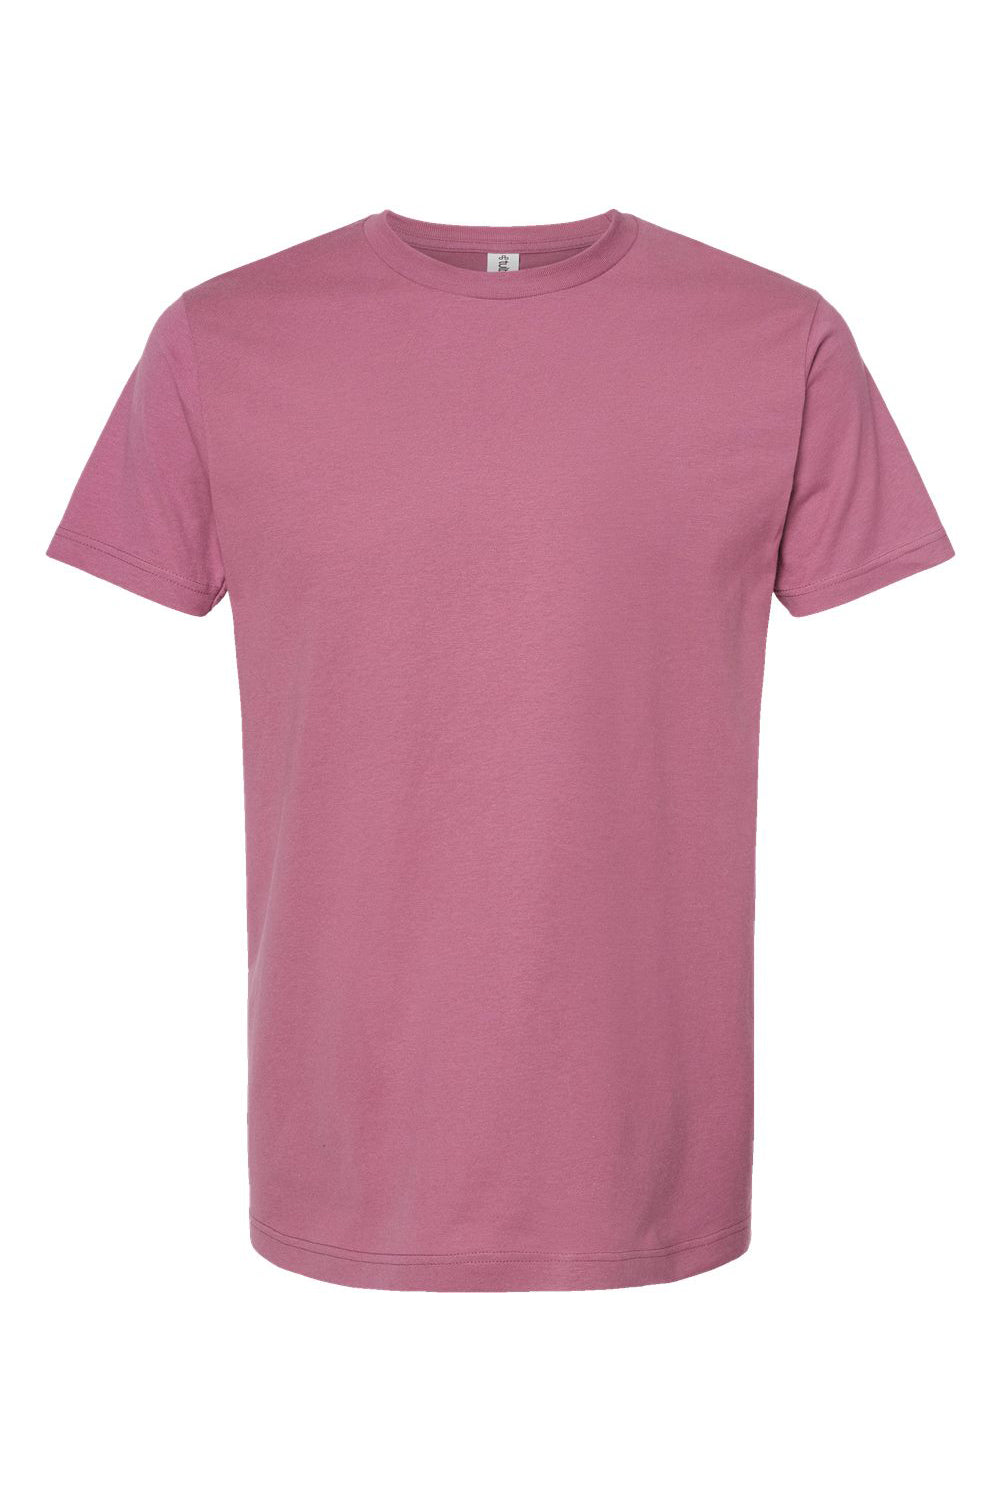 Tultex 202 Mens Fine Jersey Short Sleeve Crewneck T-Shirt Cassis Pink Flat Front